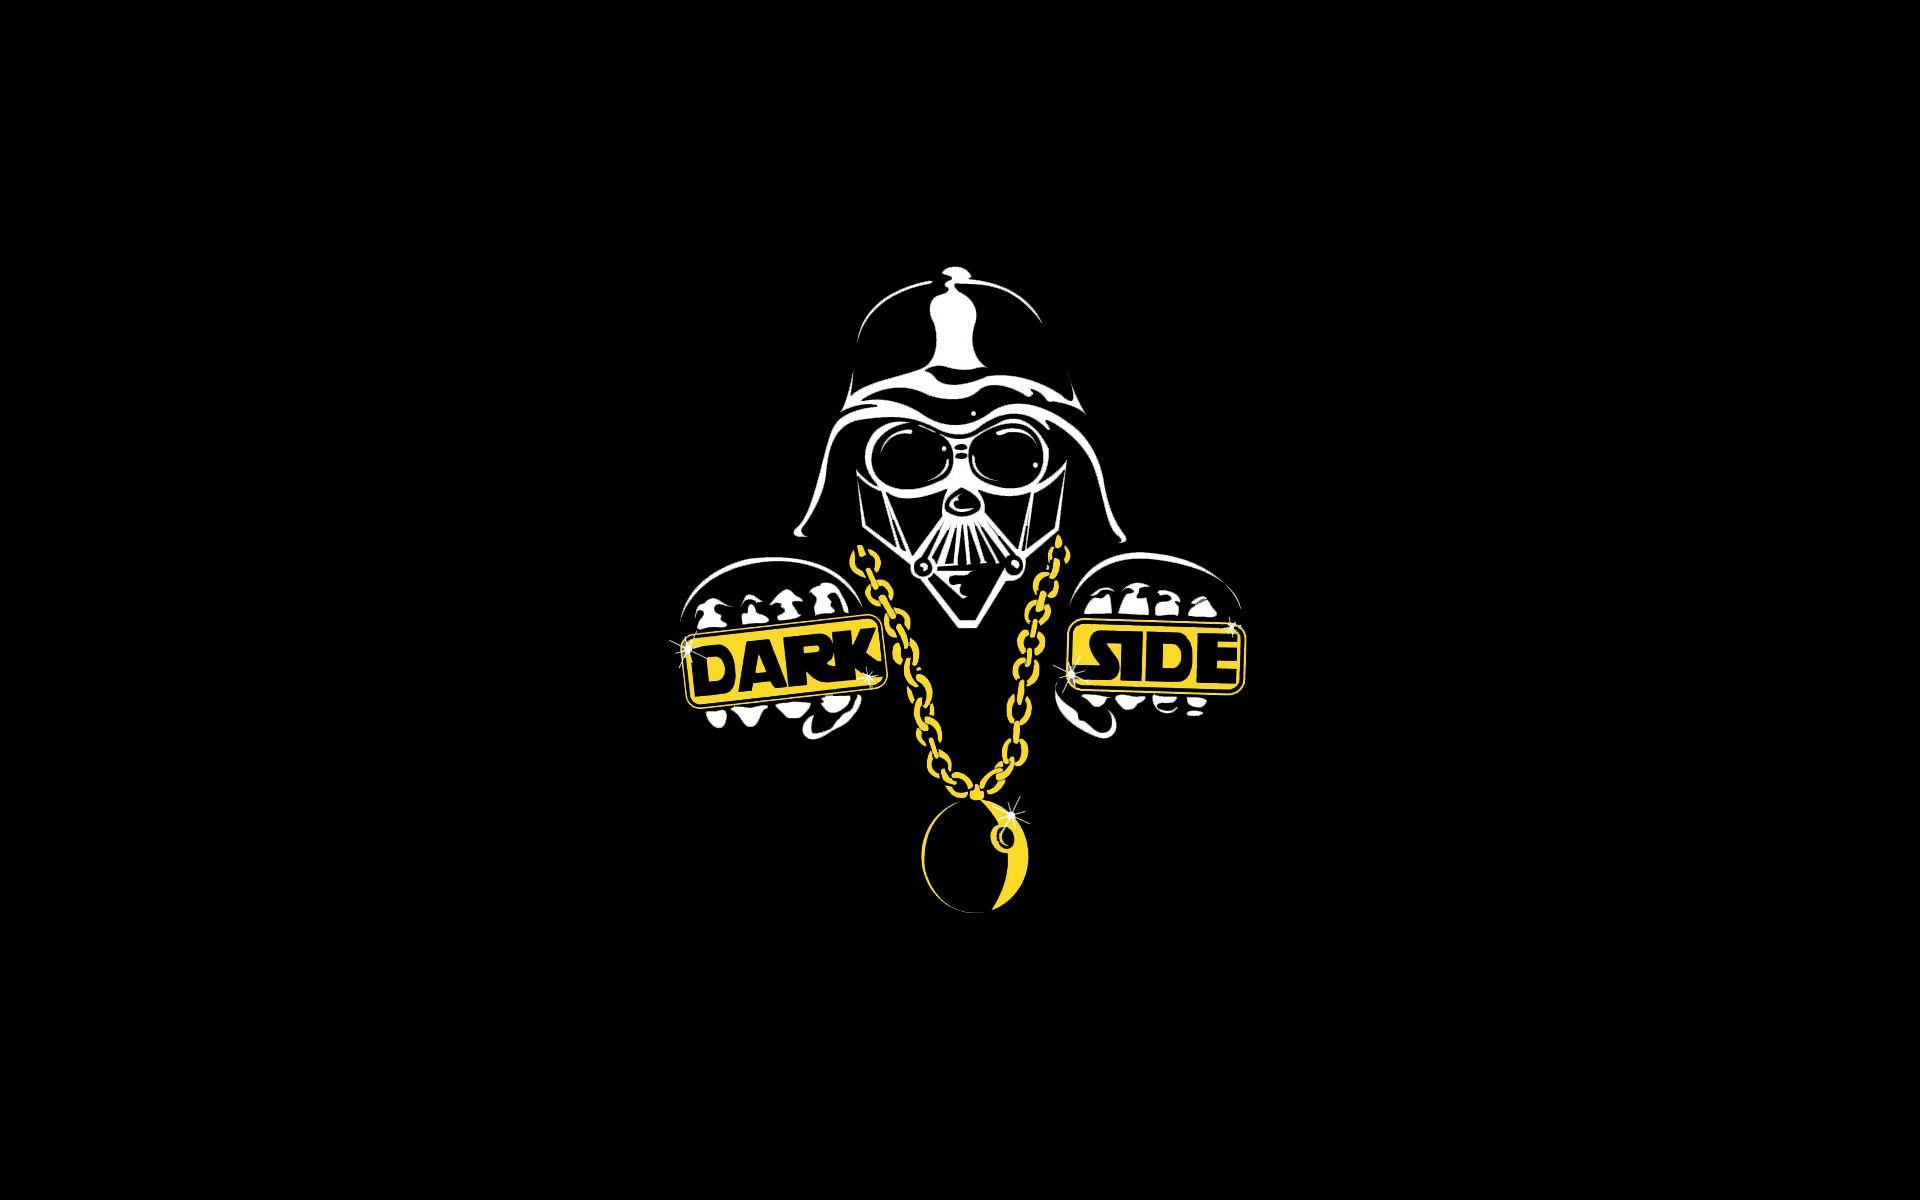 Gangster logo Vectors & Illustrations for Free Download | Freepik